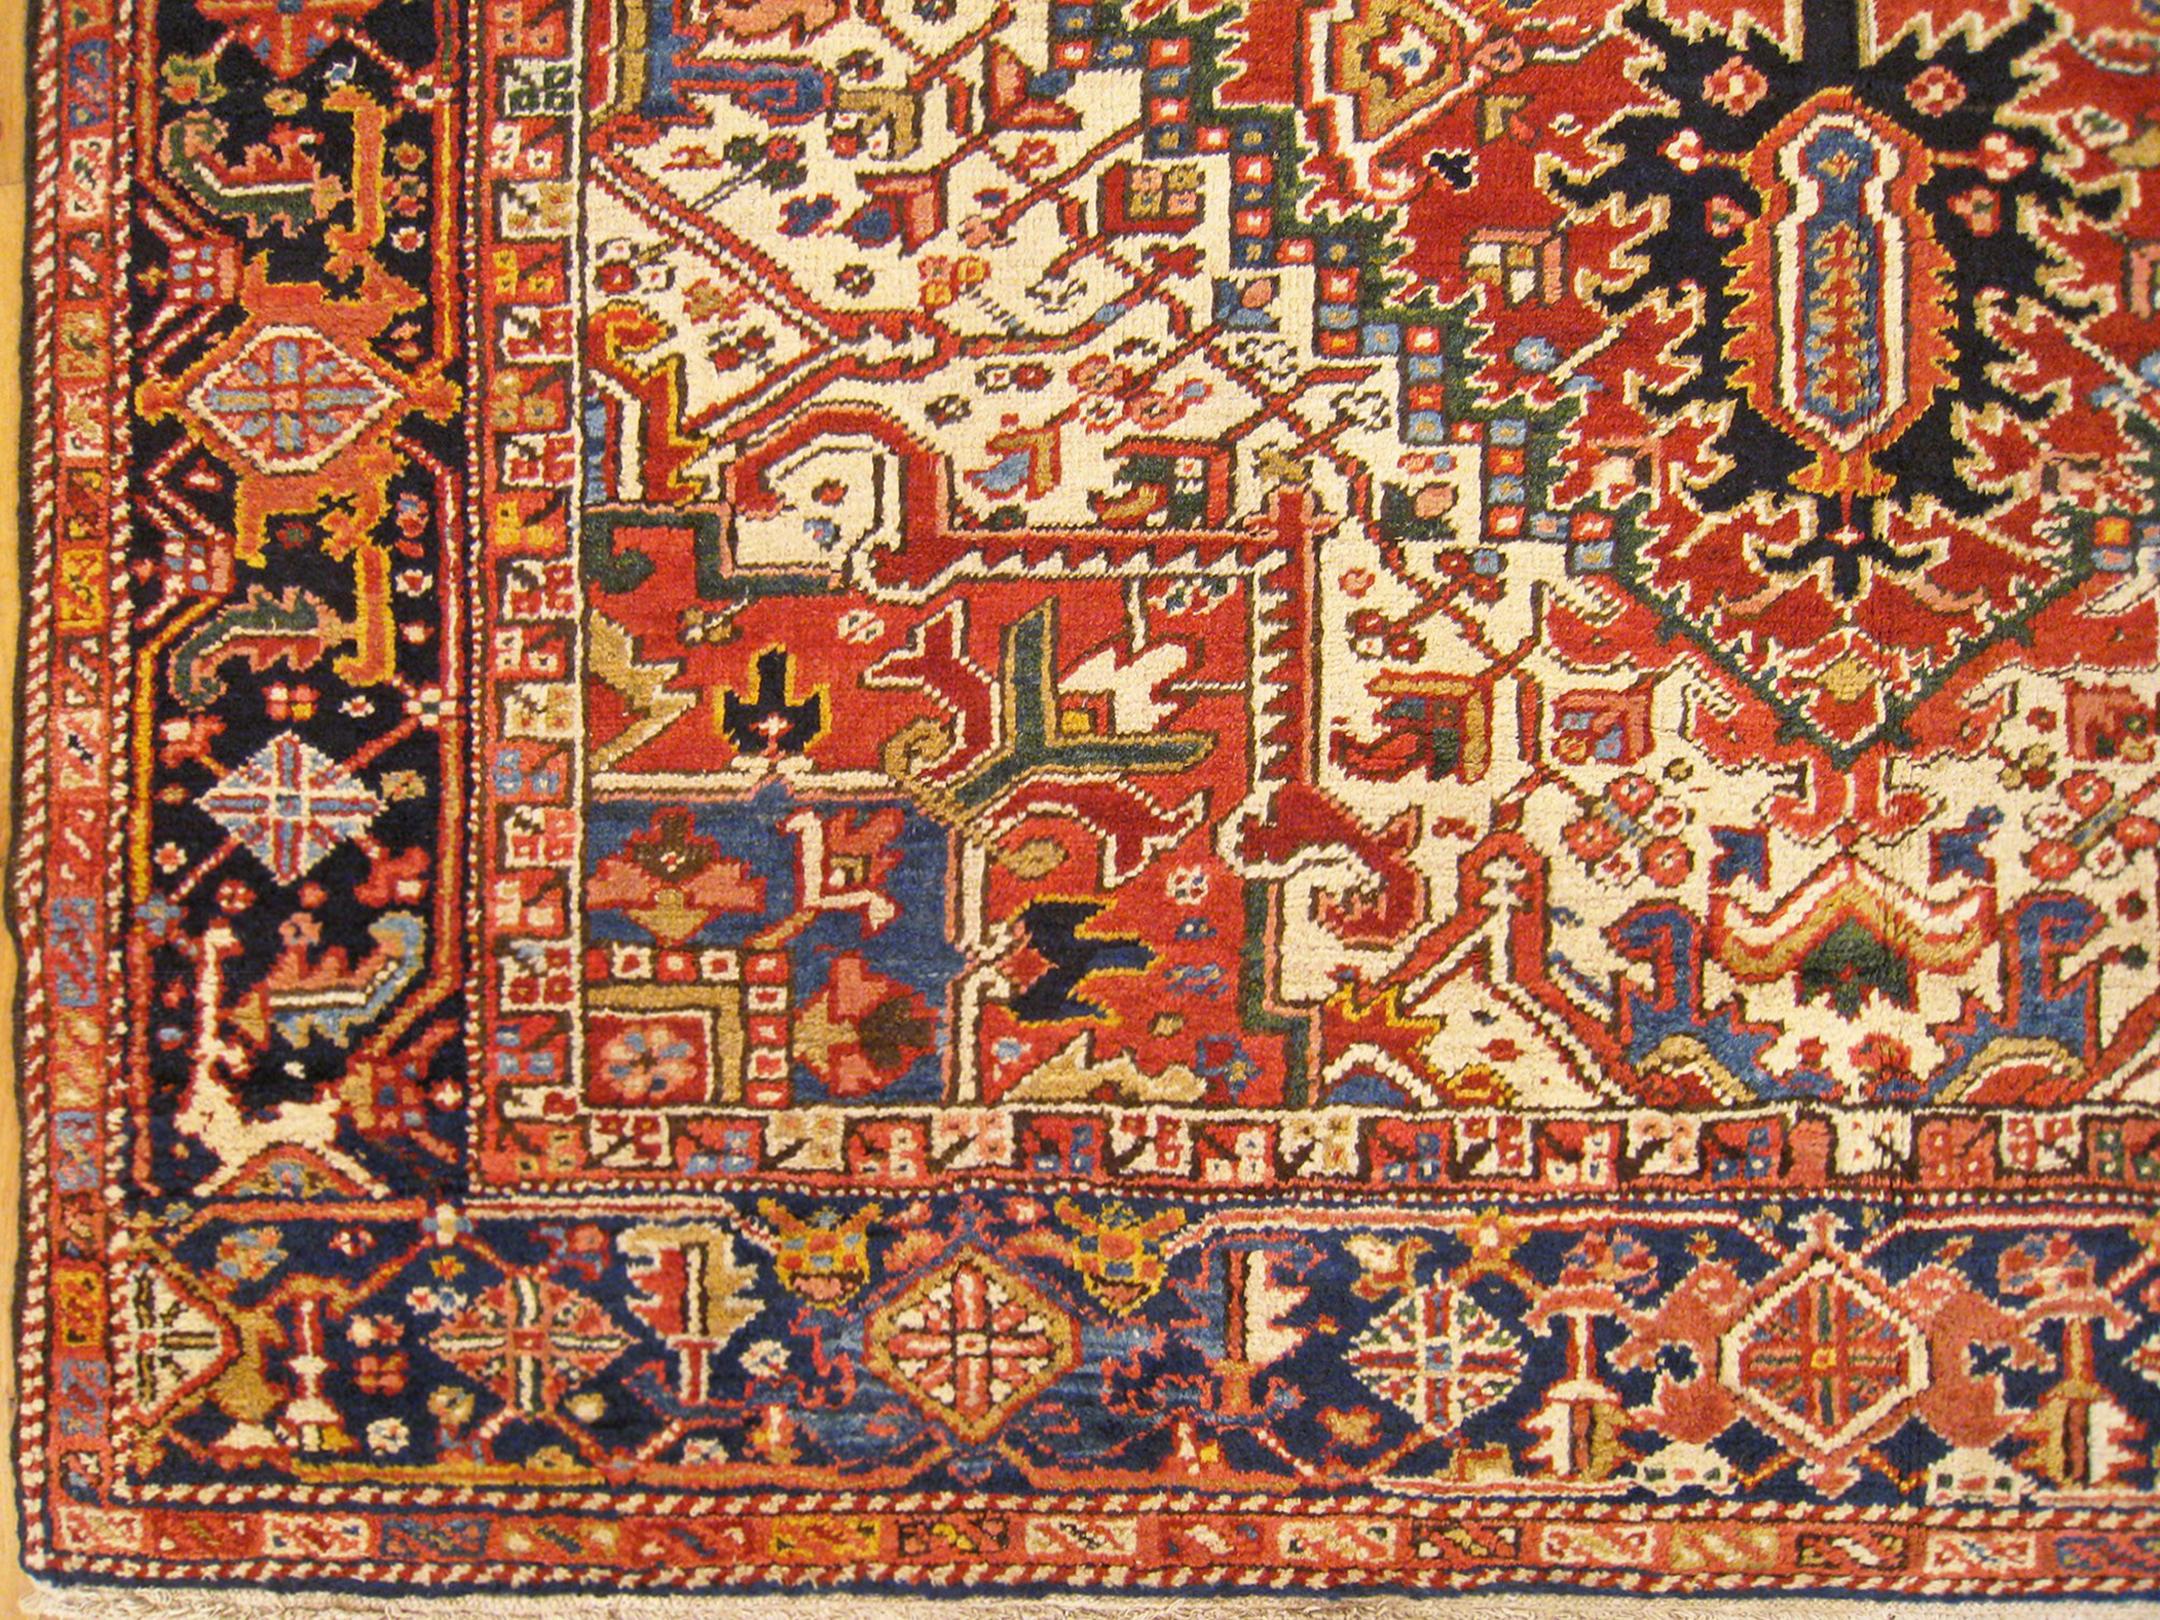  Antique Persian Decorative Oriental Heriz Rug in Room Size For Sale 2